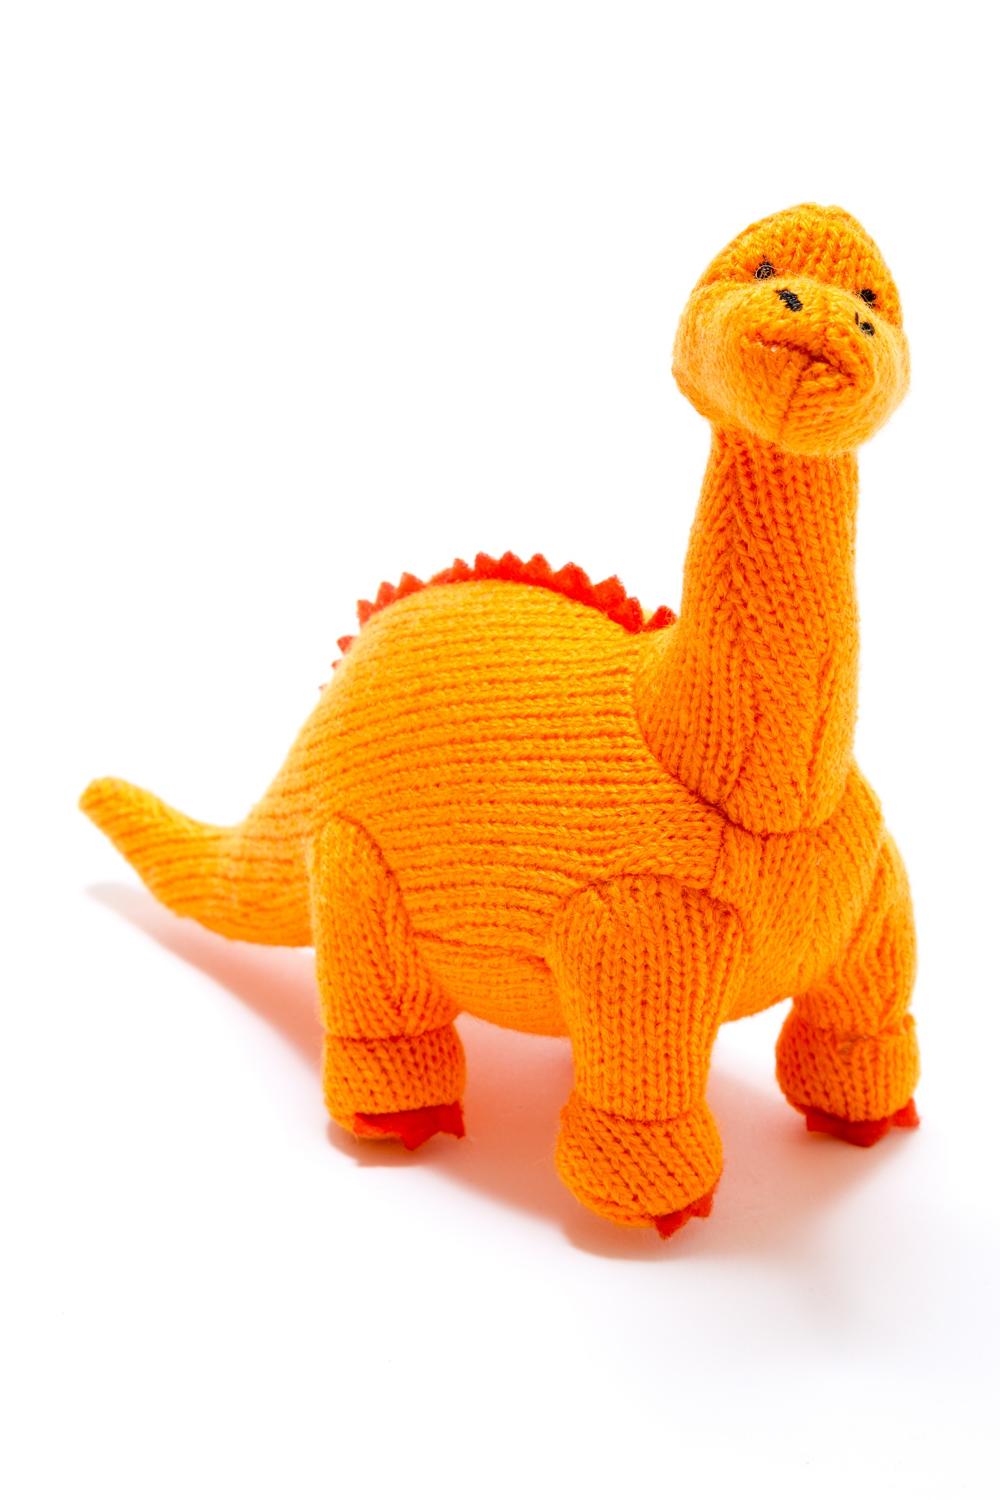 Medium orange knitted diplodocus dinosaur soft toy